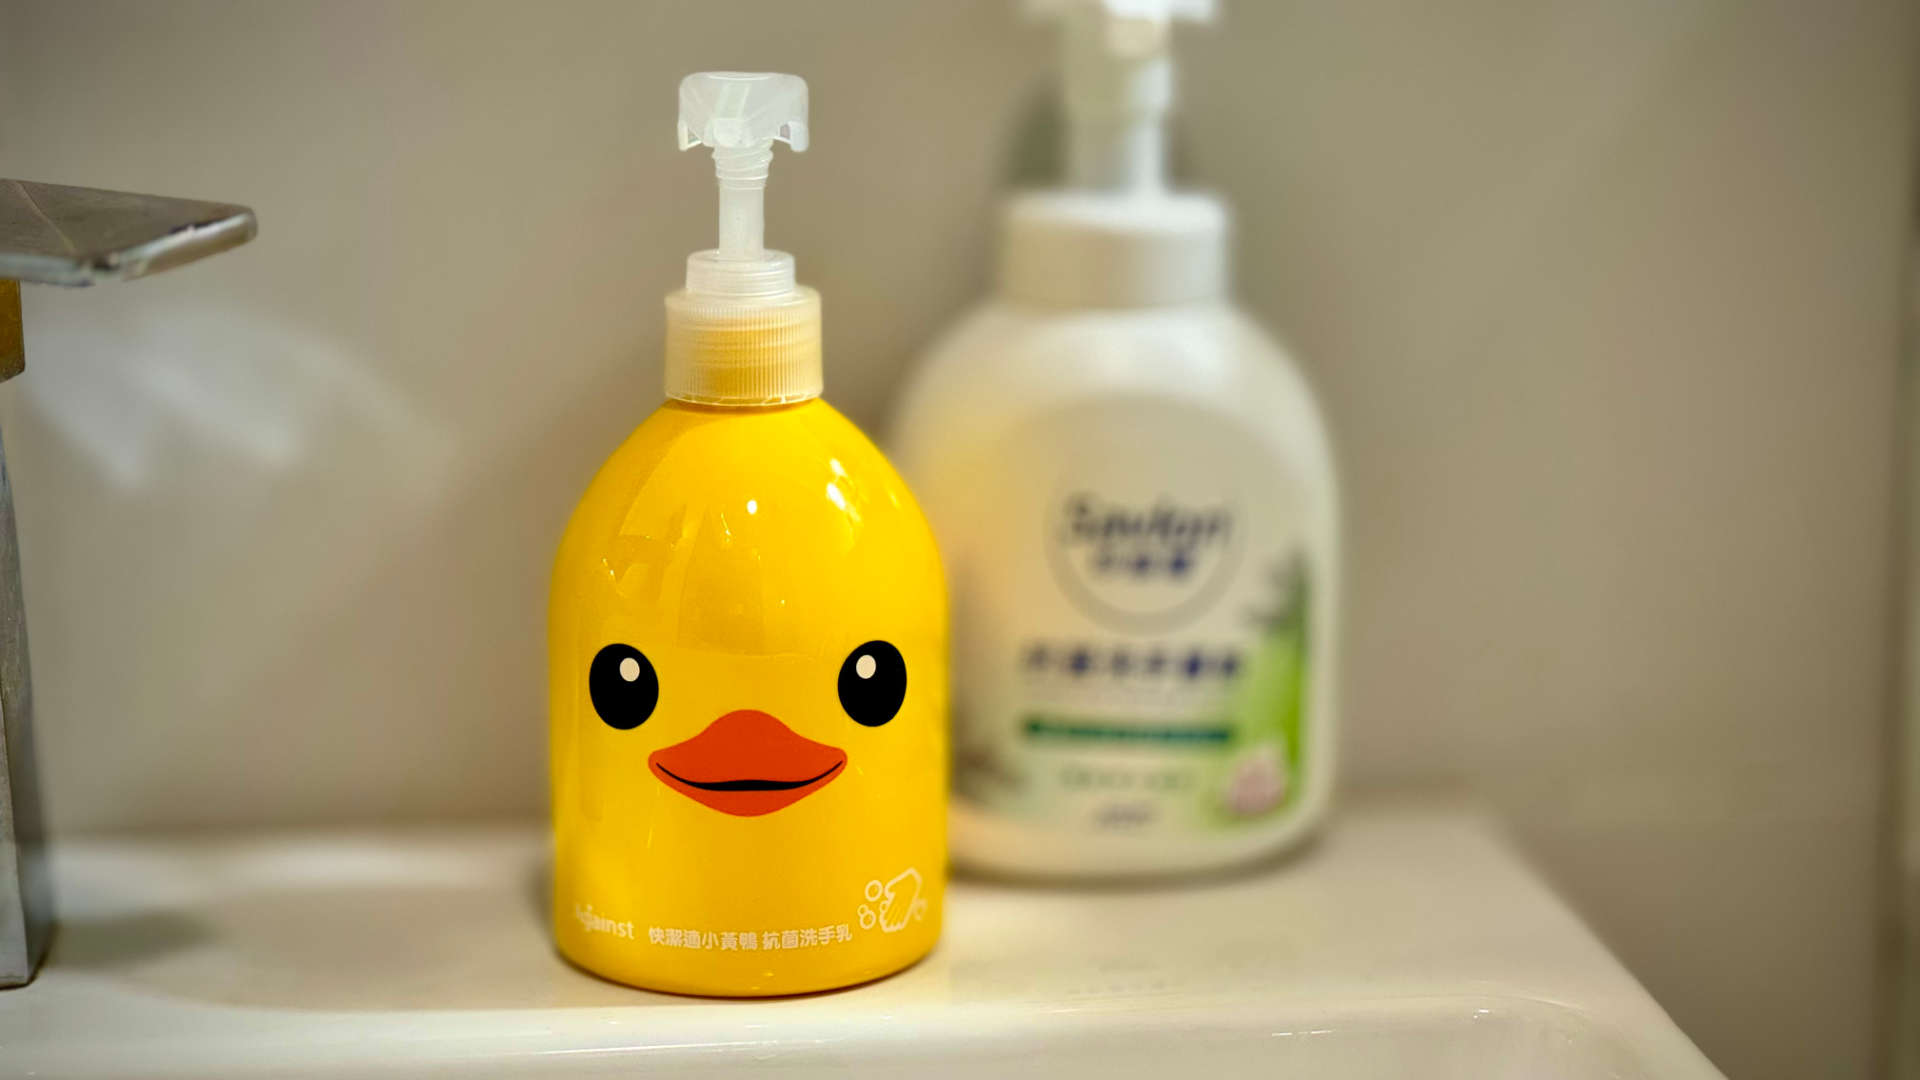 A yellow duck-shaped hand soap dispenser.